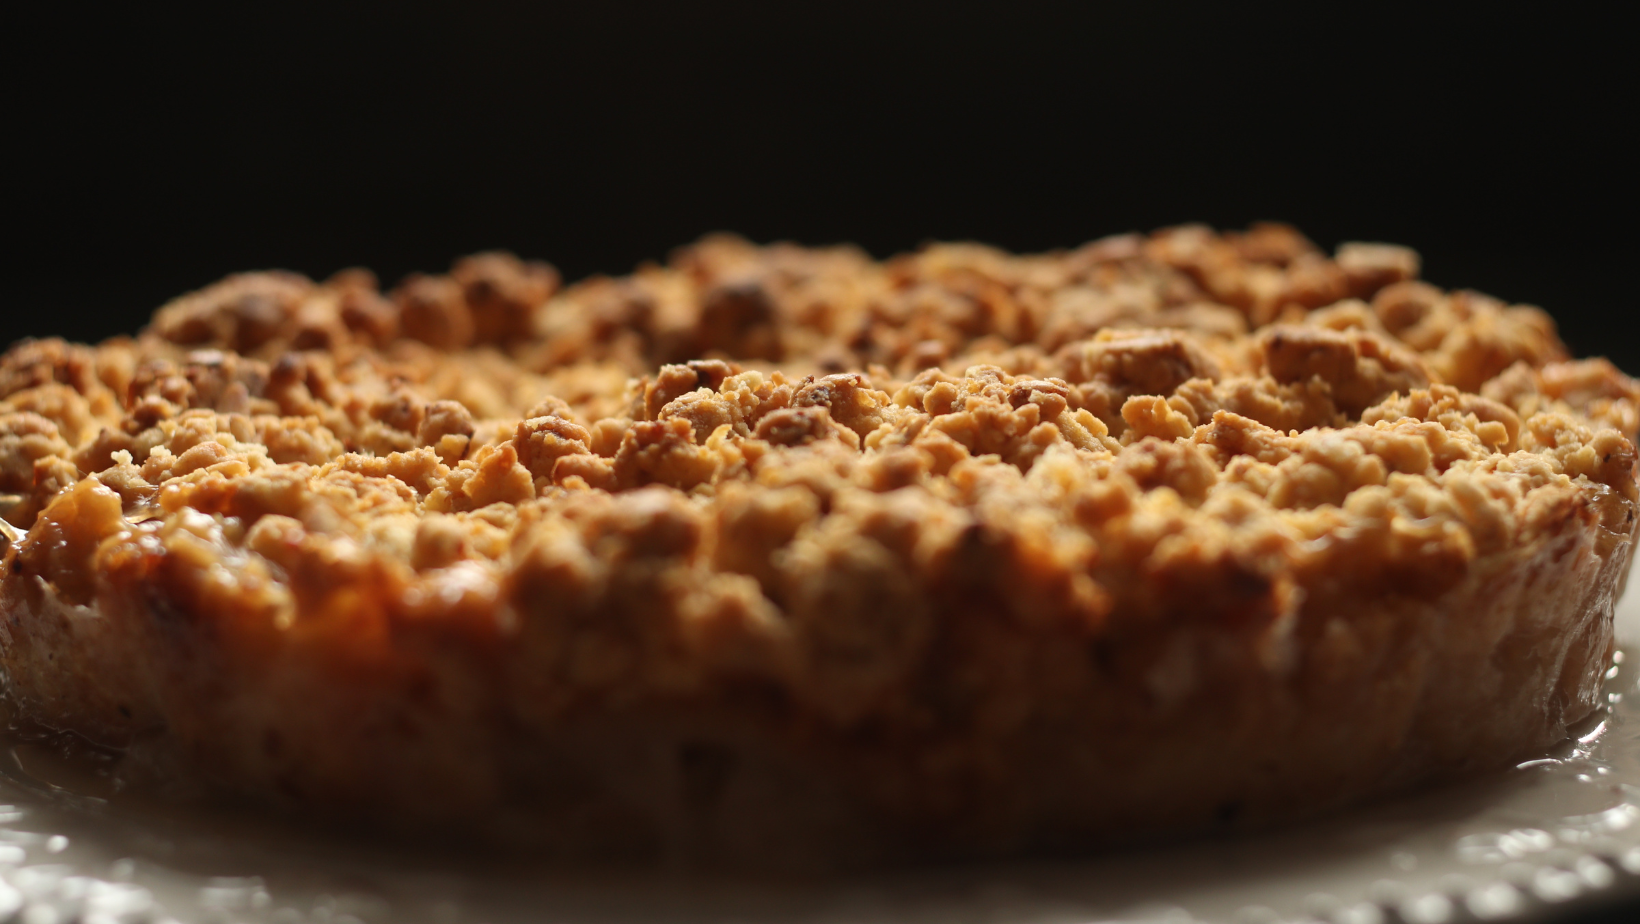 Apple, pie, tatsy. Selective focus of gluten free apple crisp pie on a dark background. Autumn concept.